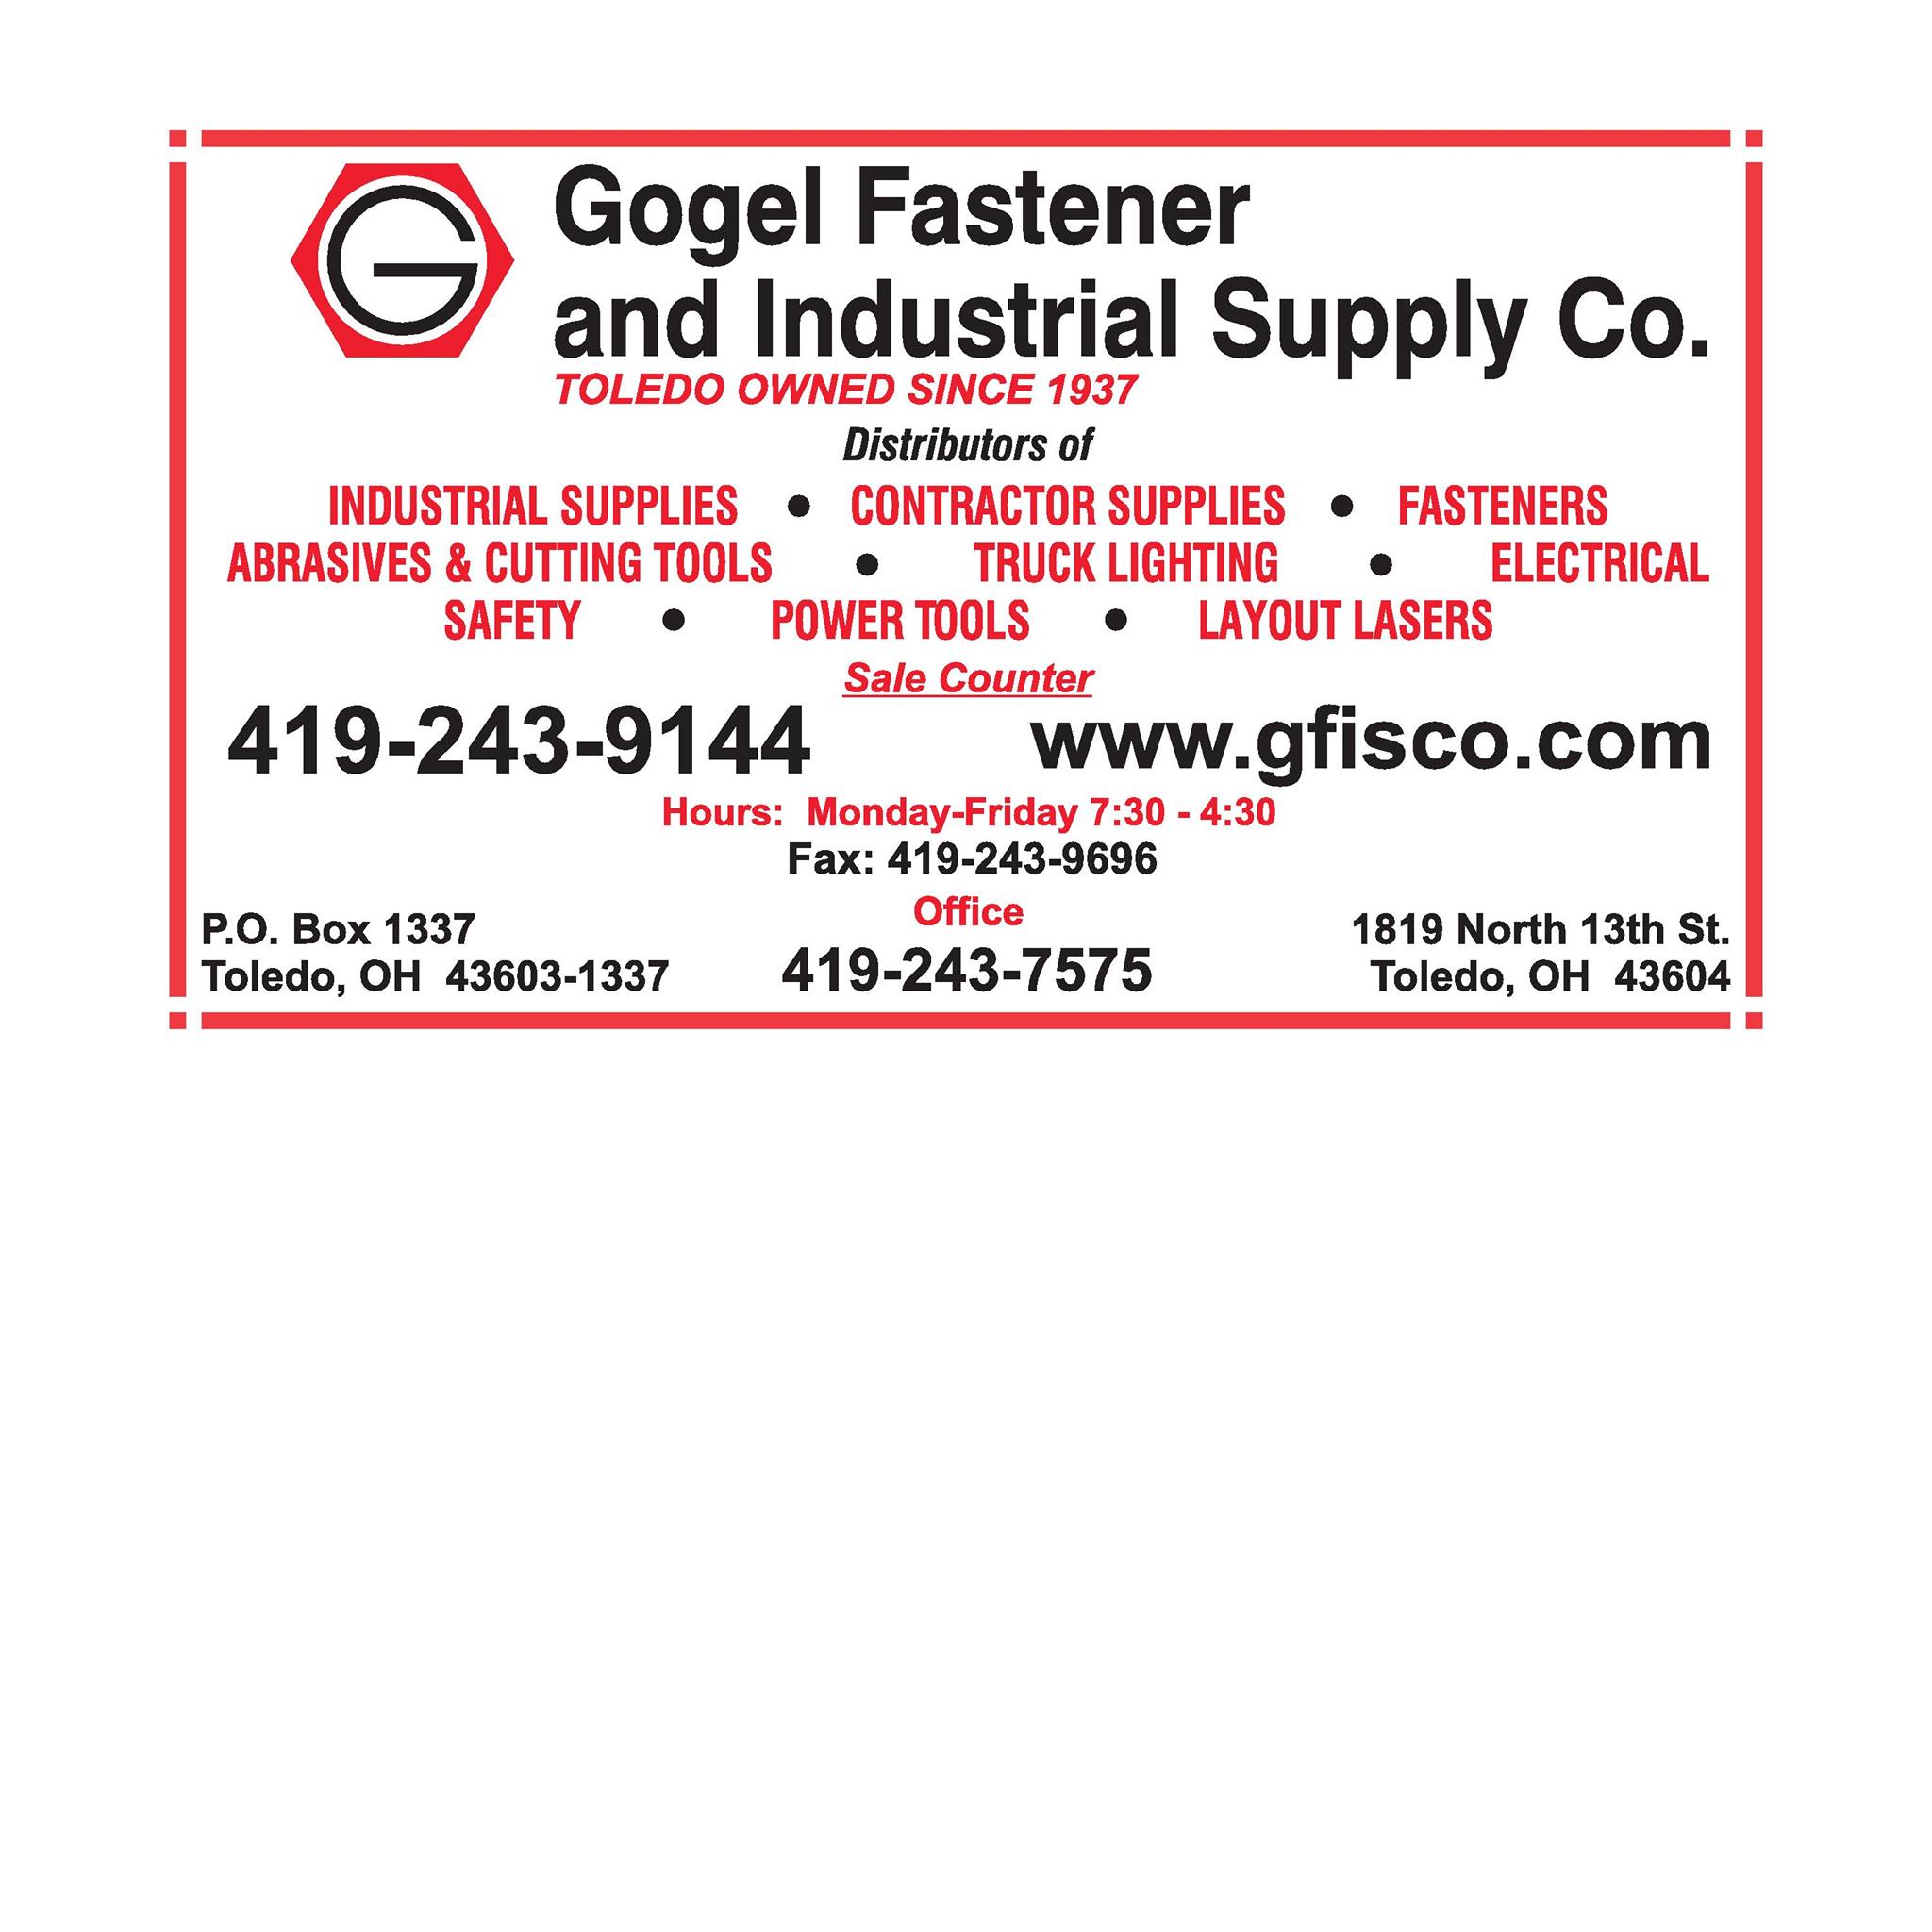 Gogel Fastener & Industrial Supply Co.